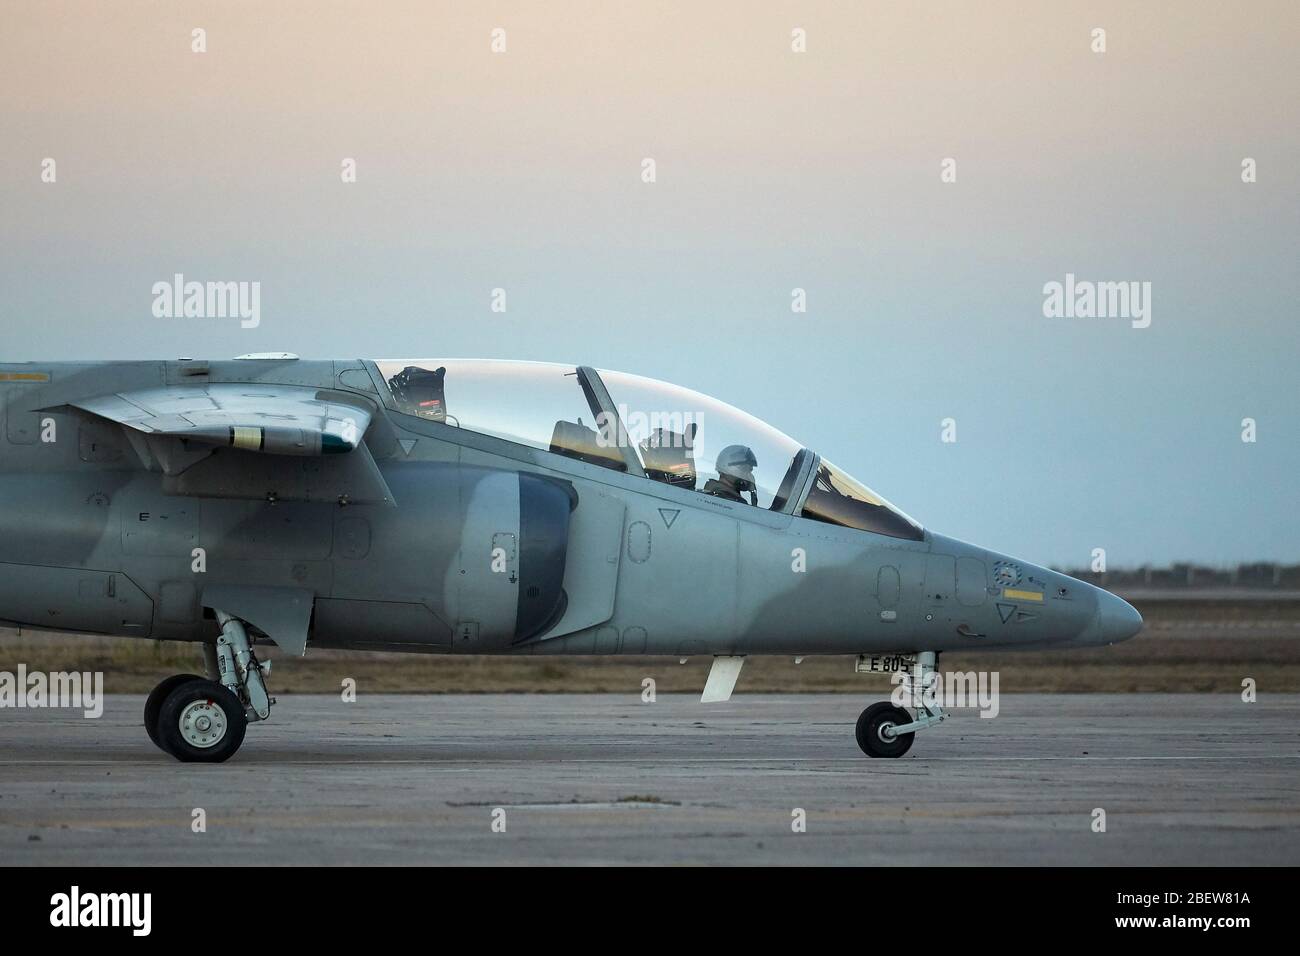 MENDOZA, ARGENTINA, June 10, 2015. IA-63 Pampa, is a training aircraft with combat capabilities, designed and built in Argentina, IV Brigada Aerea, La Stock Photo